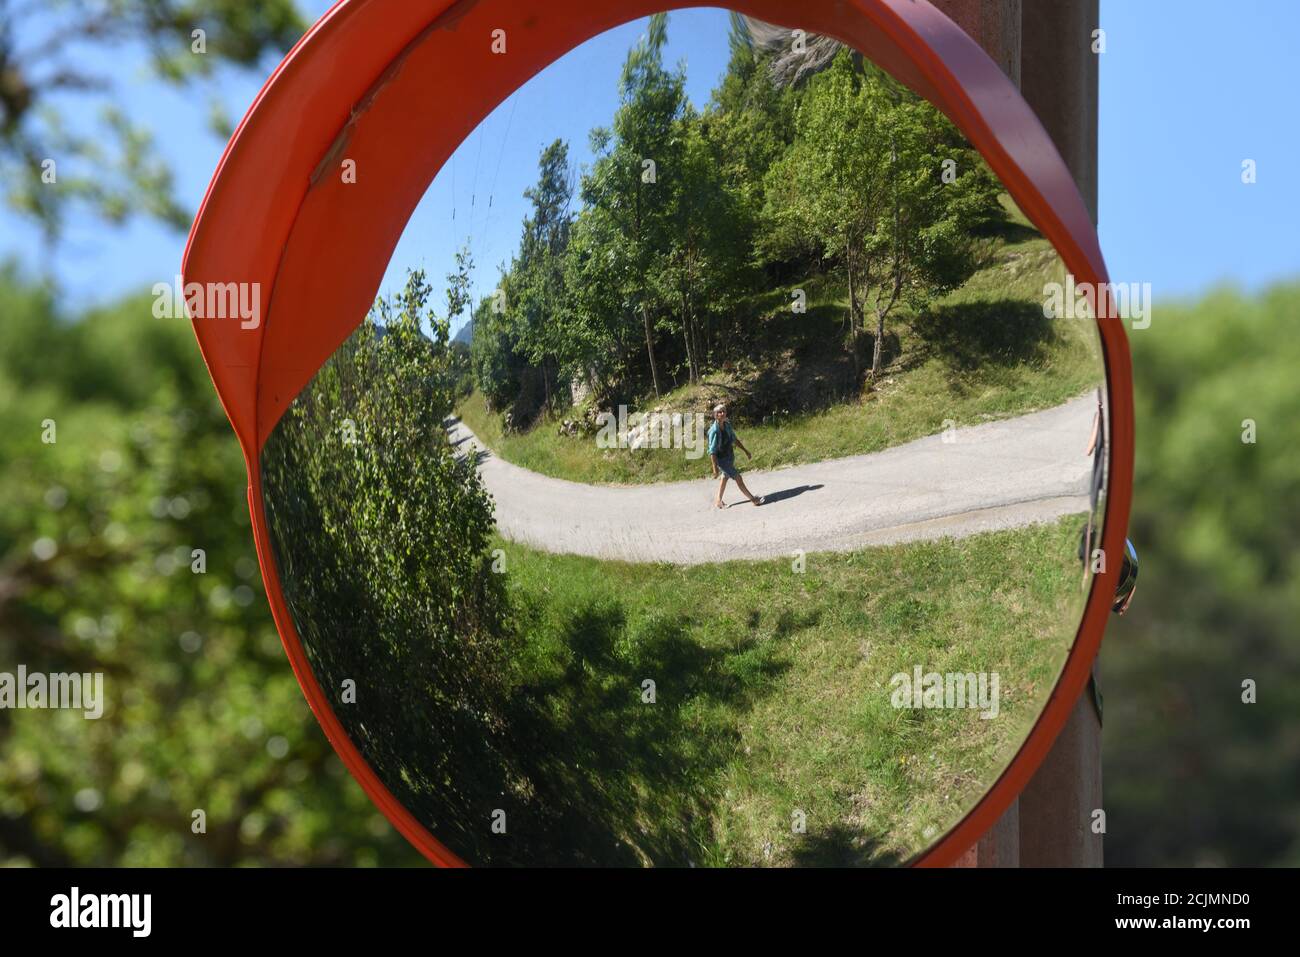 Convex mirror security -Fotos und -Bildmaterial in hoher Auflösung – Alamy